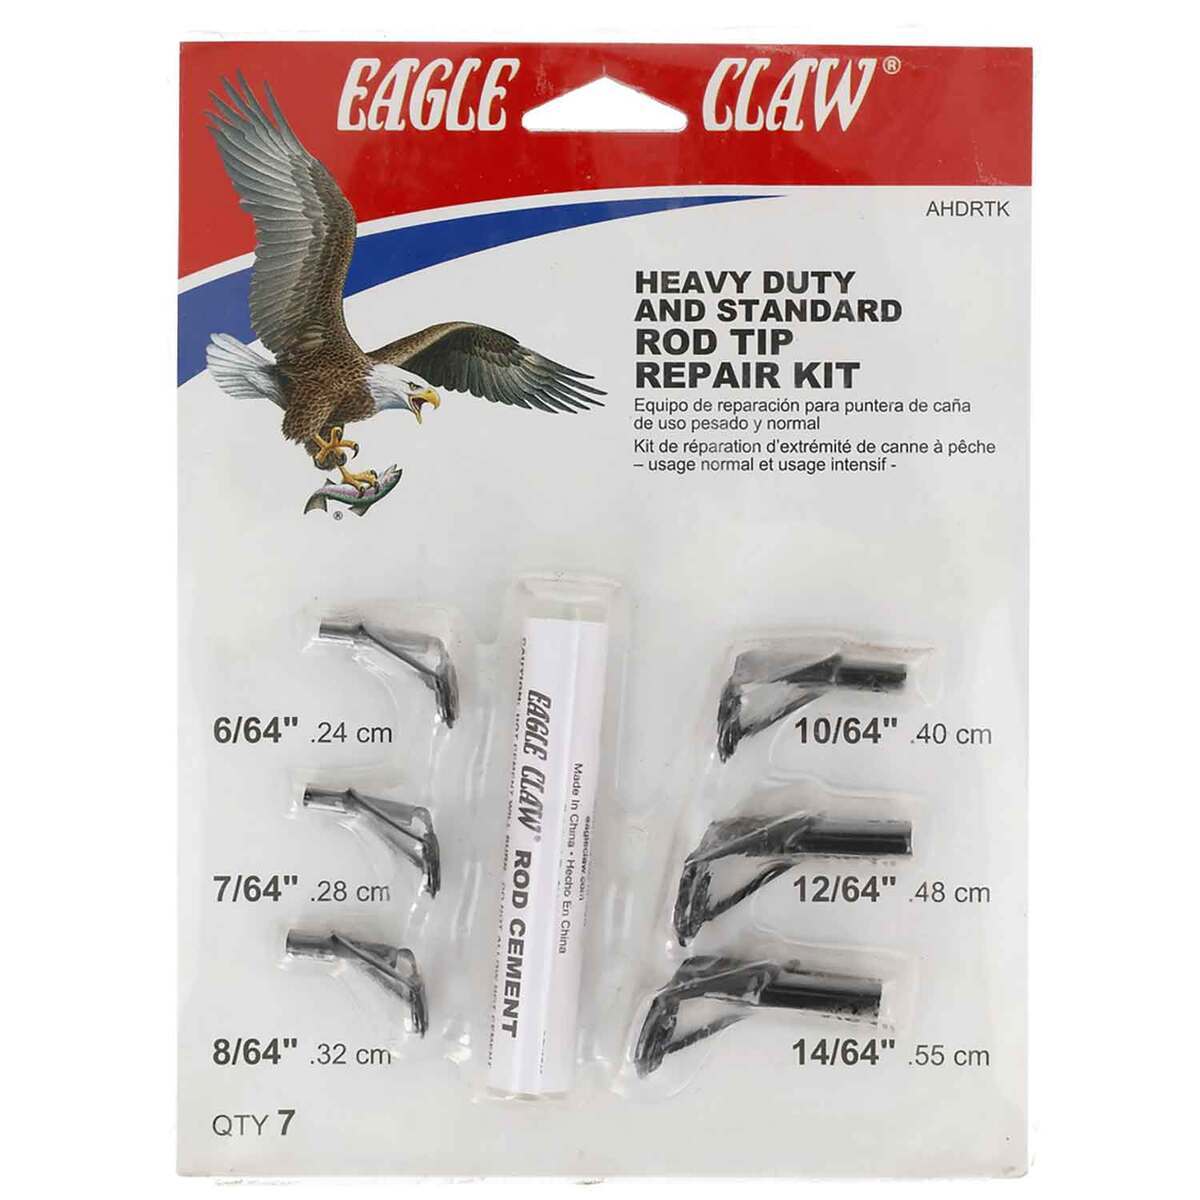 https://www.sportsmans.com/medias/eagle-claw-heavy-duty-and-standard-rod-tip-repair-kit-1545259-1.jpg?context=bWFzdGVyfGltYWdlc3w5MDY2NnxpbWFnZS9qcGVnfGFHVTVMMmcyWXk4eE1EVTNORGMxTURNNE5ERTFPQzh4TlRRMU1qVTVMVEZmWW1GelpTMWpiMjUyWlhKemFXOXVSbTl5YldGMFh6RXlNREF0WTI5dWRtVnljMmx2YmtadmNtMWhkQXw5MjYwMDQ1N2E2MTVkNGMzOWFlZDc4NmMxZmUwZThkM2NjYWIwNWVlNTM3M2E0ZGVlZGUzYzNhMzg1ZWQ2YzY5